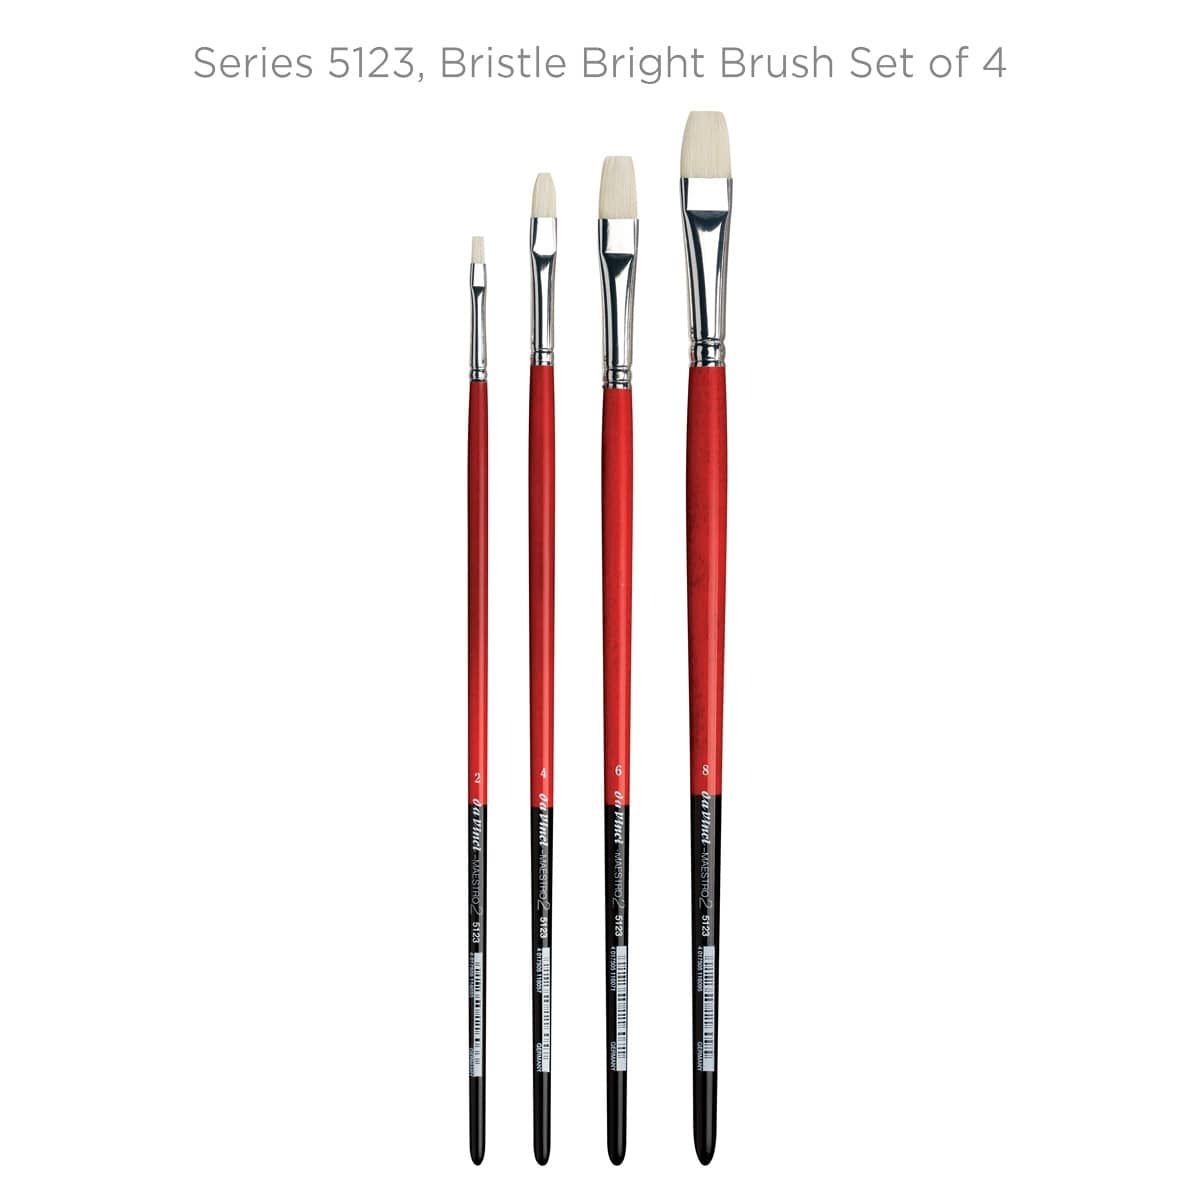 Series 5123, Bristle Bright Brush Set of 4